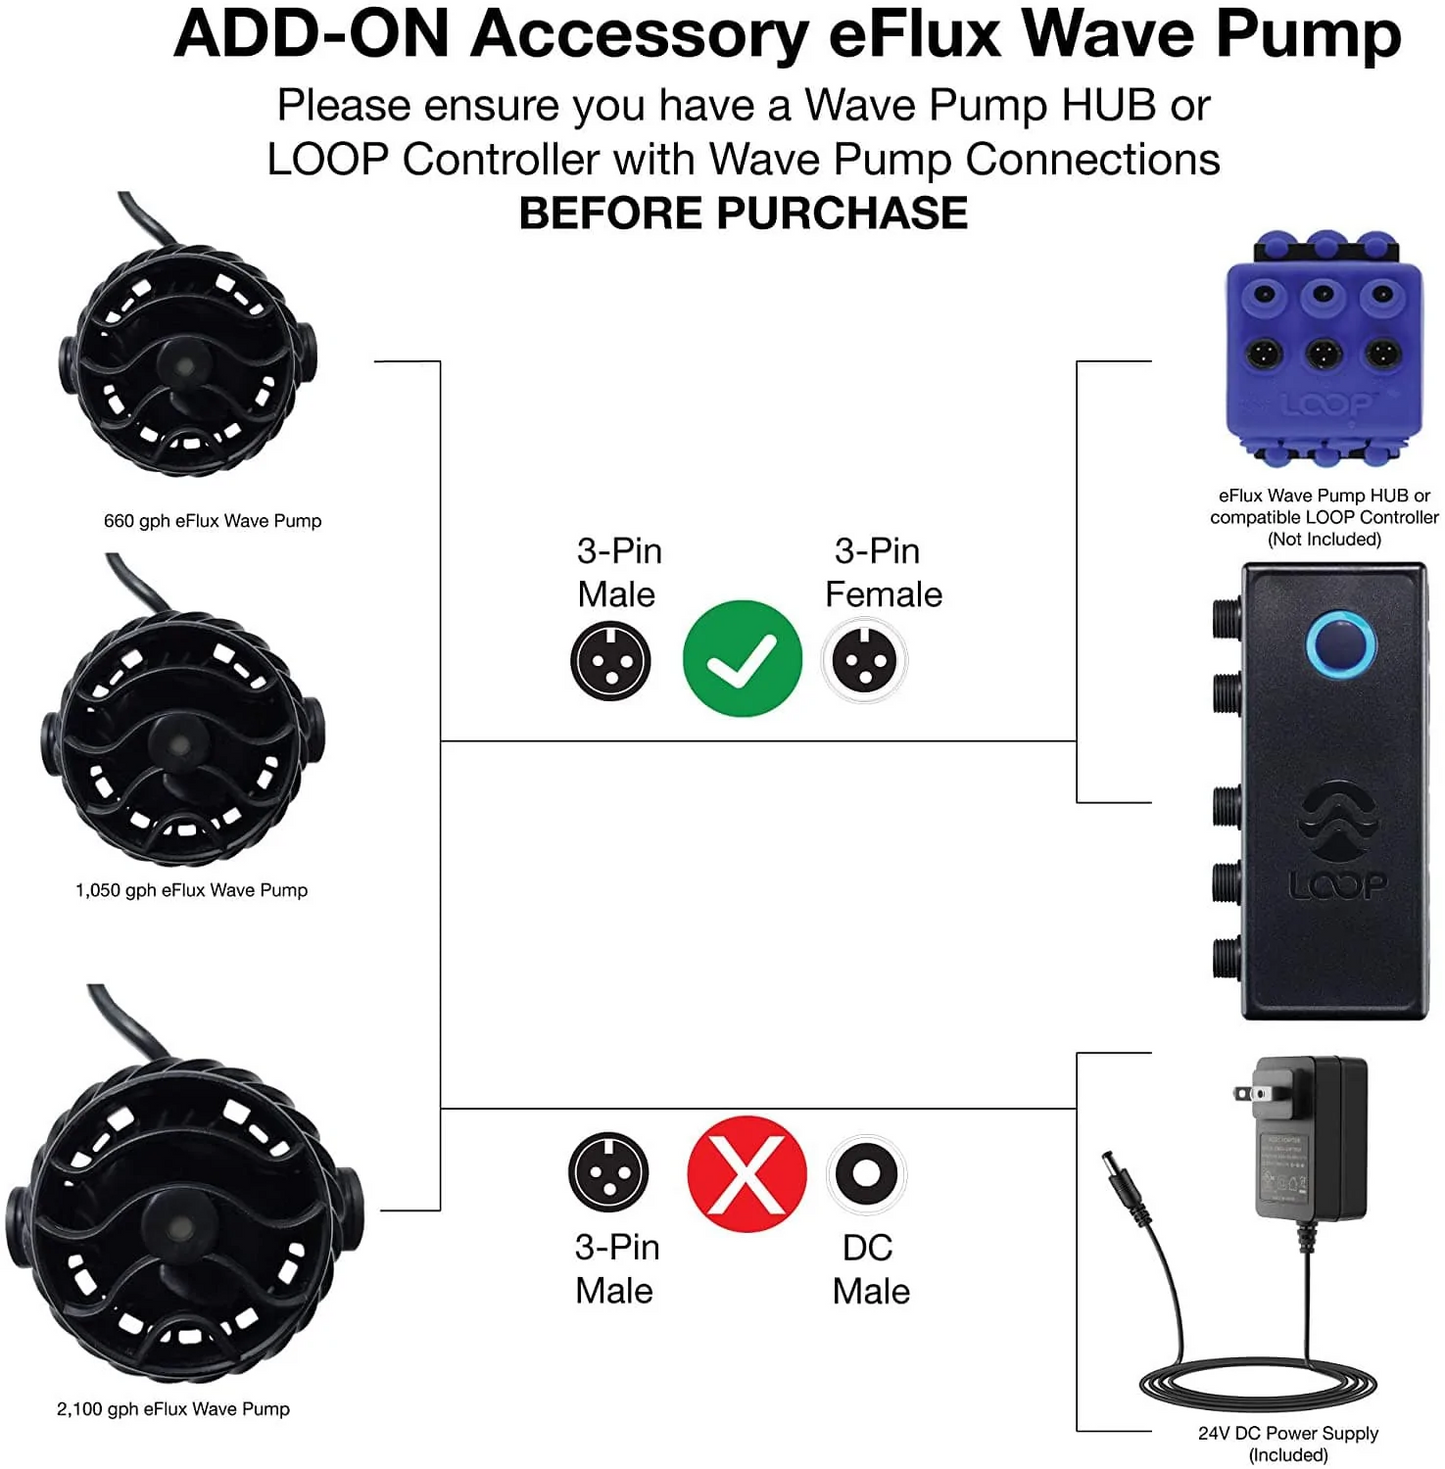 Current eFlux Wave Pump 2100 Accessory Wave Pump Part# 6006